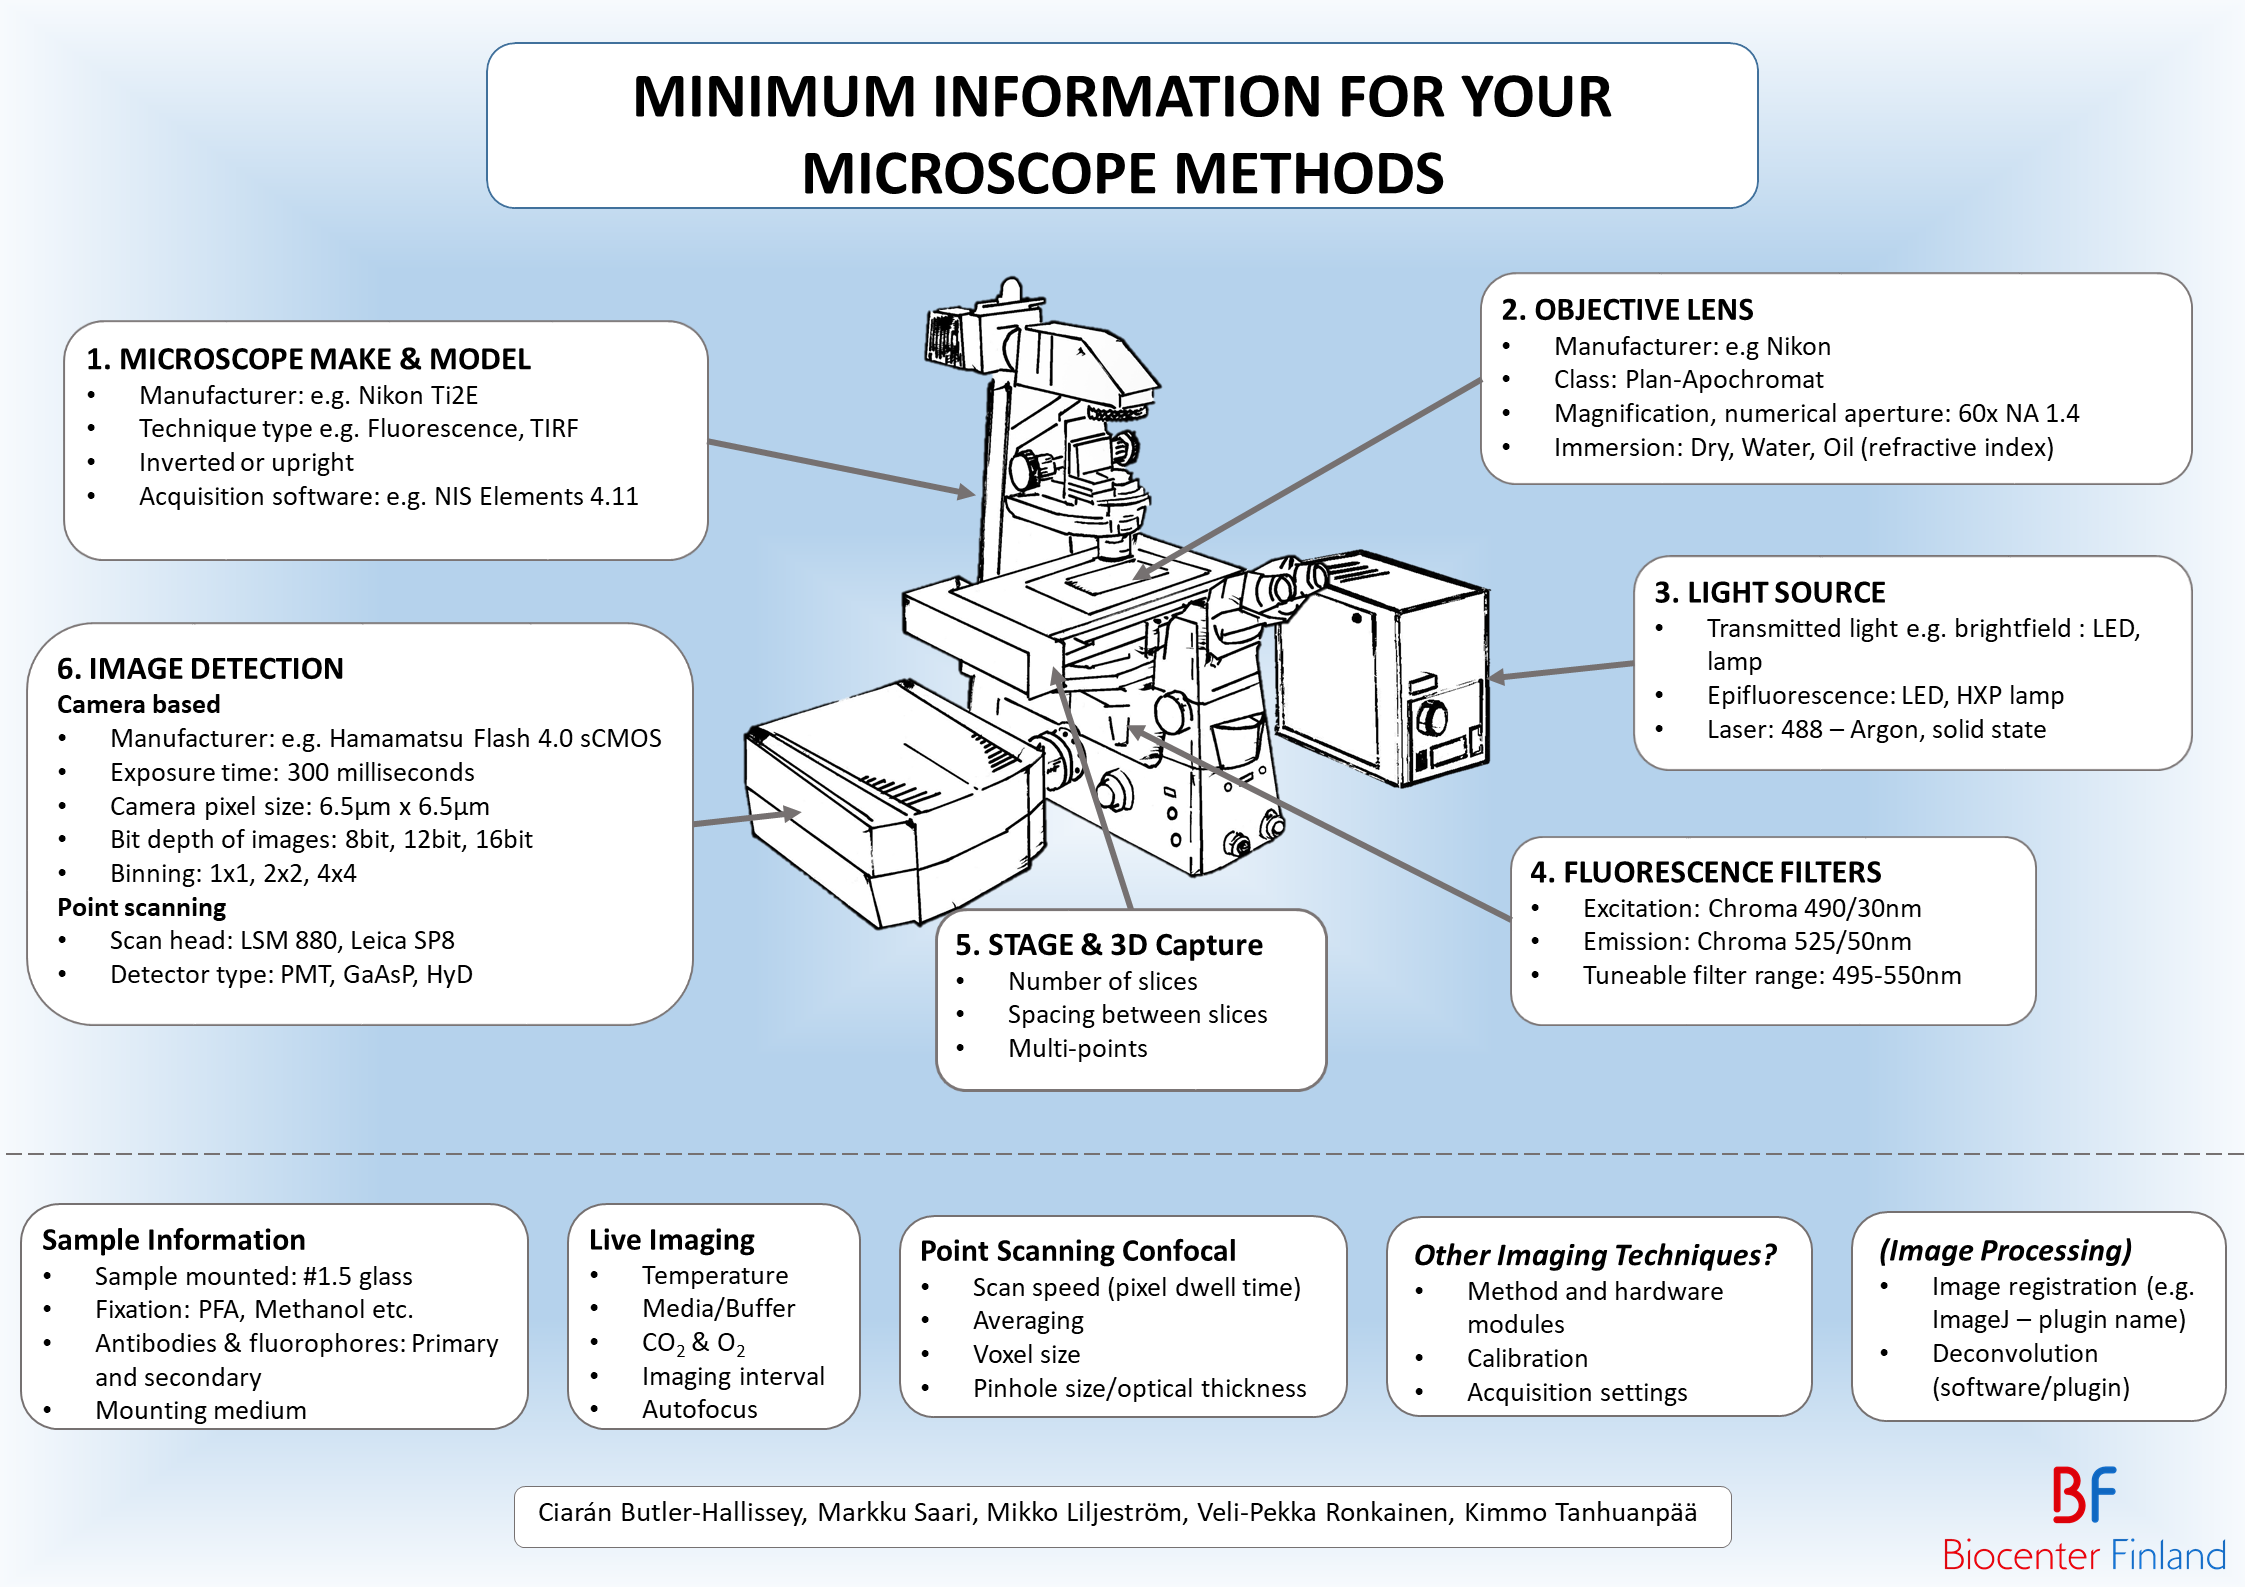 Minimum information for you microscopy methods image